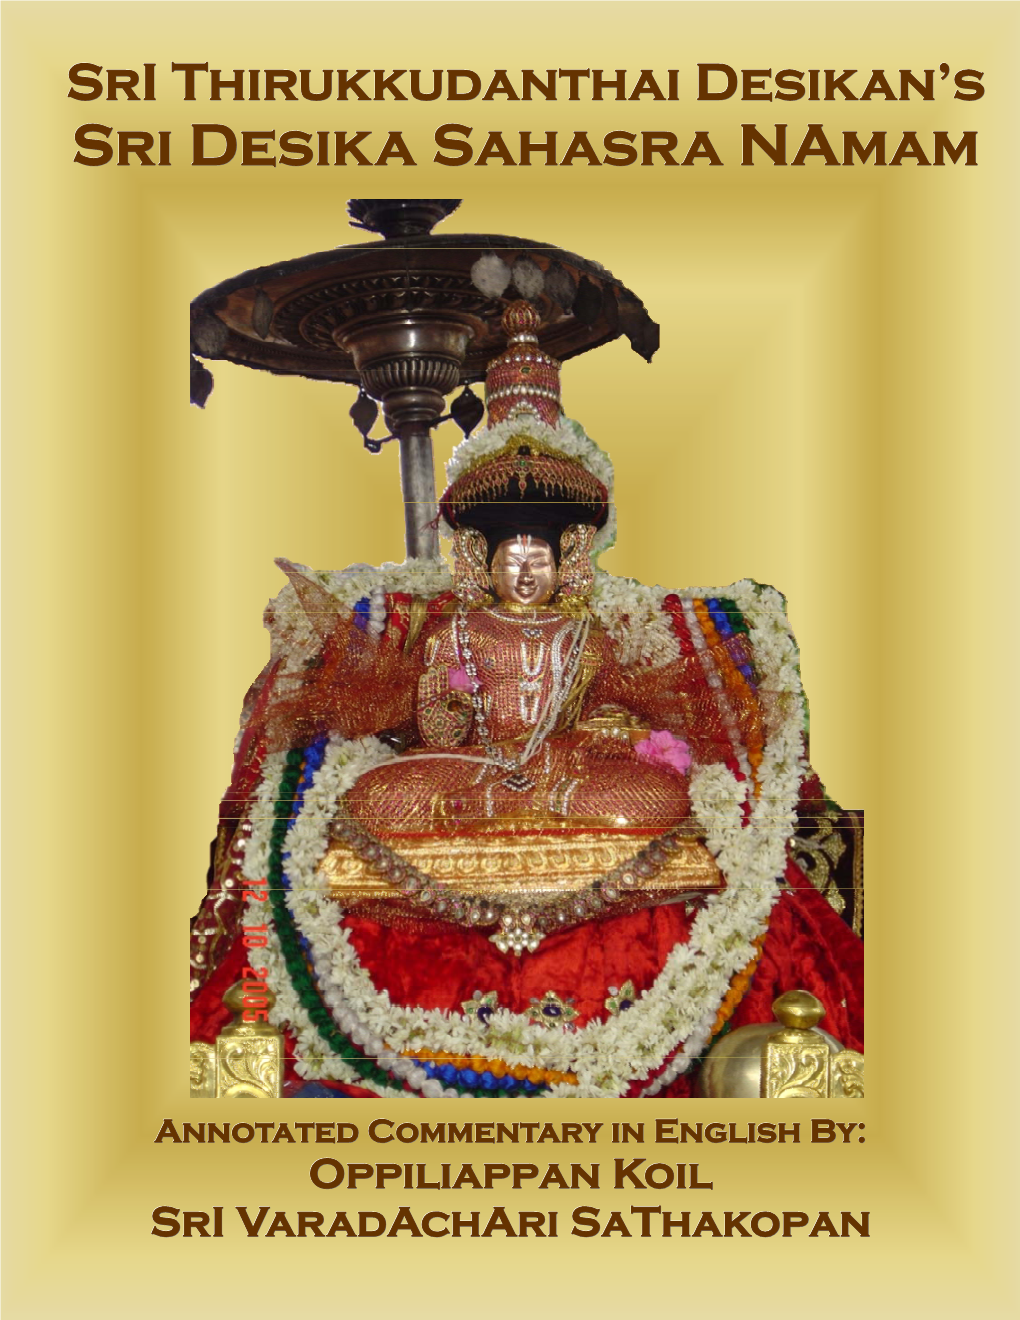 Sri Thirukkudanthai Desikan's